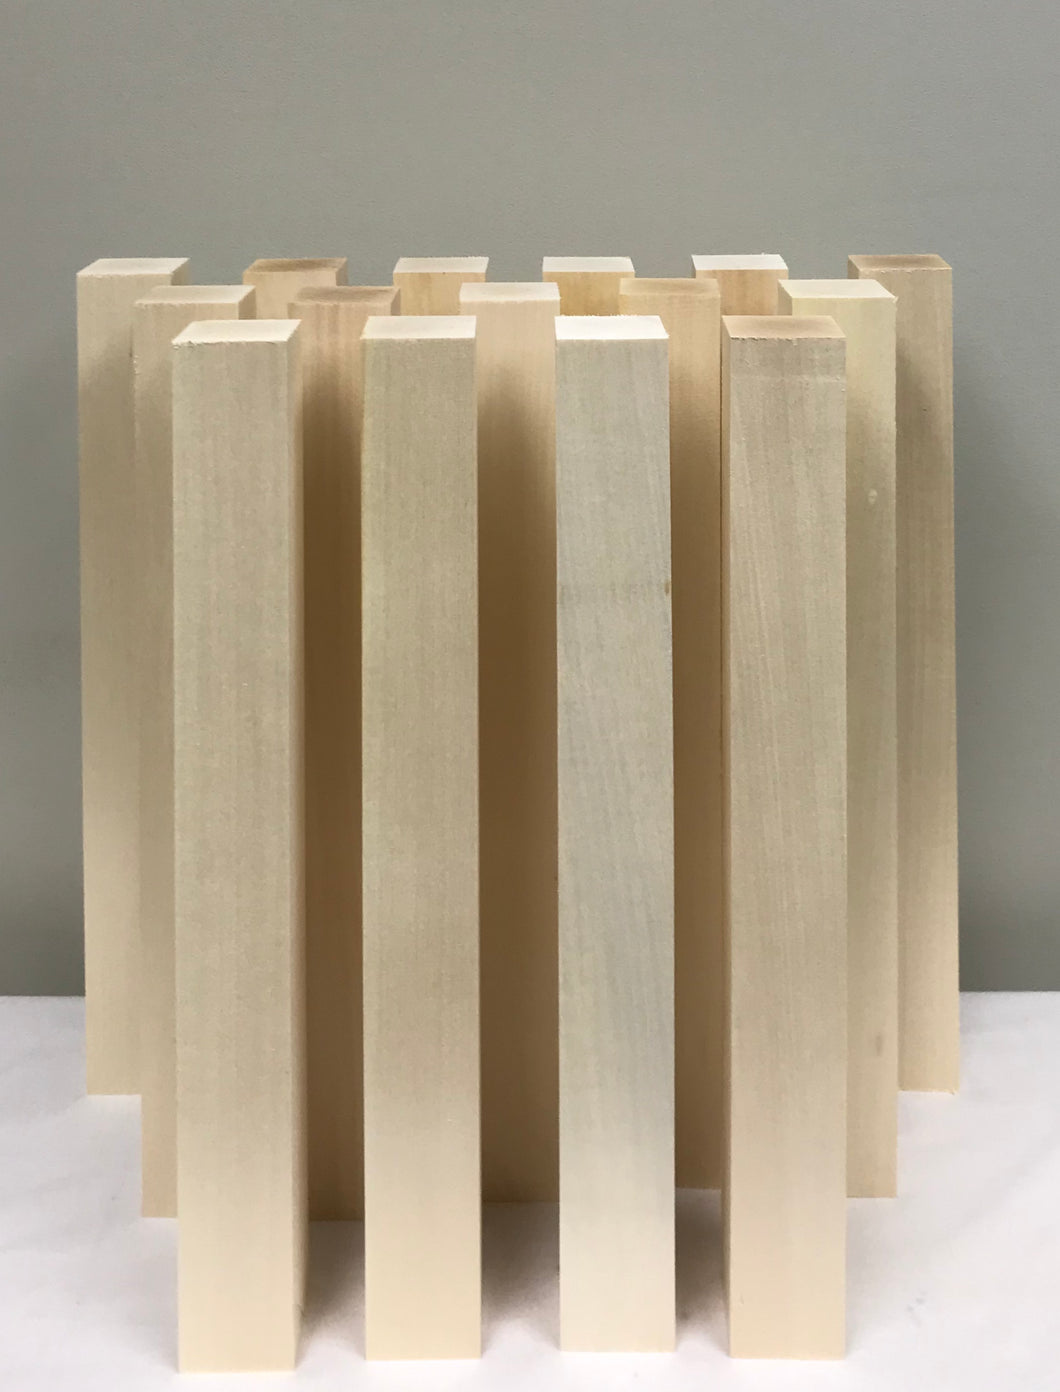 Basswood Carving Blocks - (15) 2